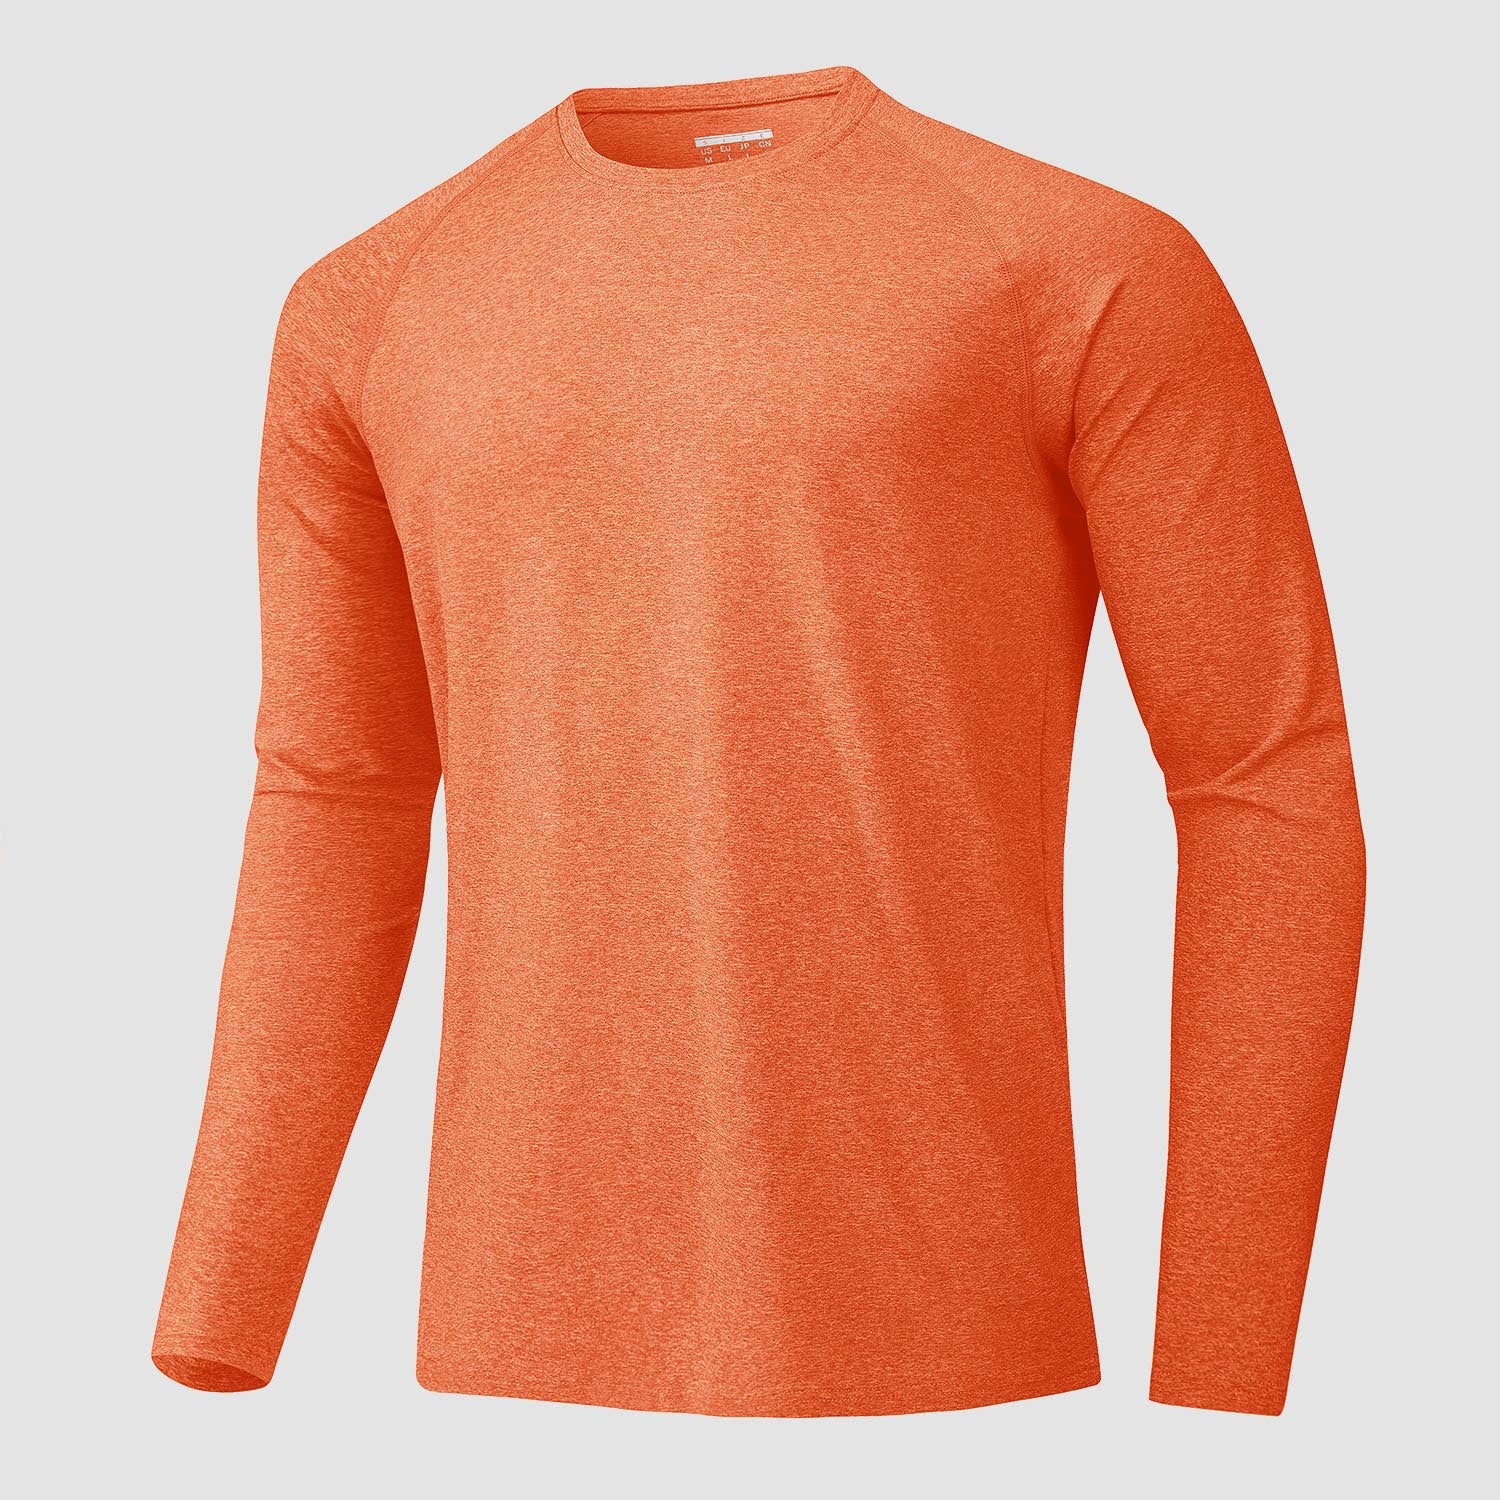  Womens Sun Shirts 1/4 Zip Pullover UPF50+ UV Protection  Lightweight Quick Dry Golf Hiking Running Workout Tops Light Green Size XL